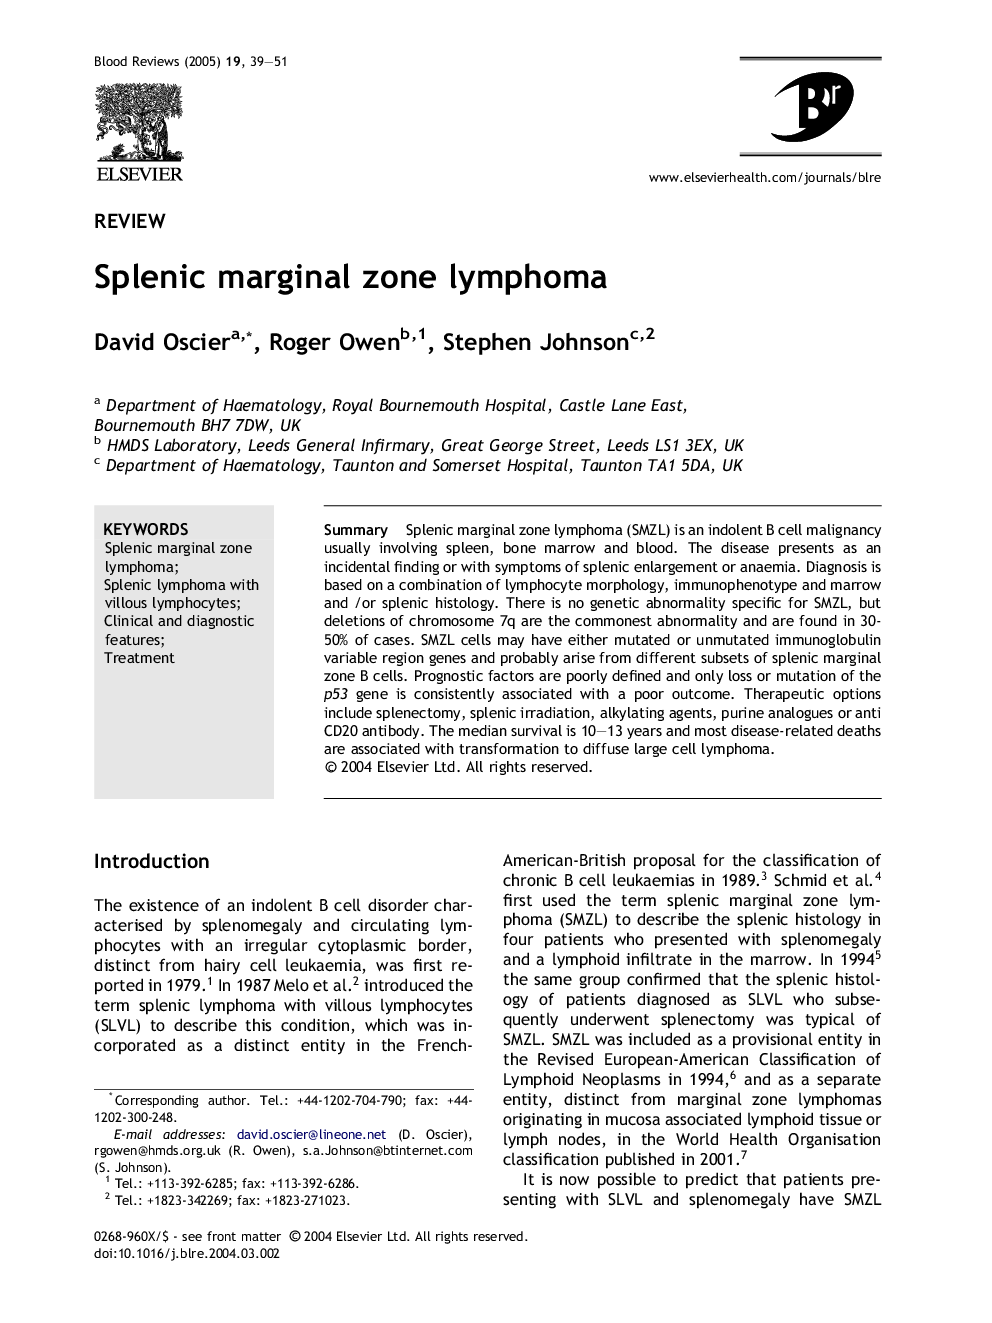 Splenic marginal zone lymphoma